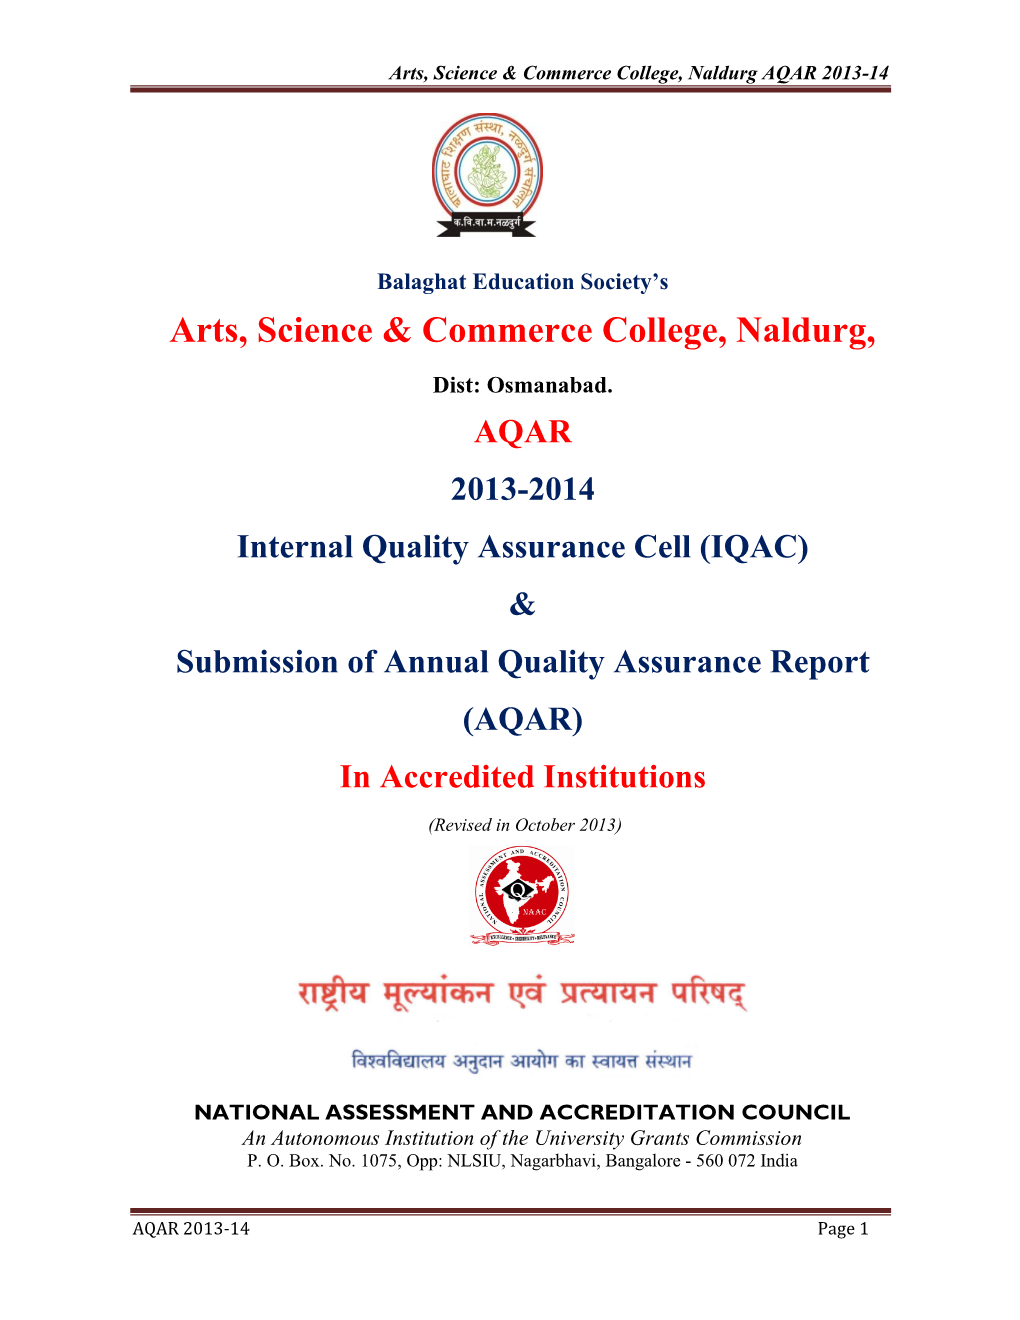 Arts, Science & Commerce College, Naldurg AQAR 2013-14